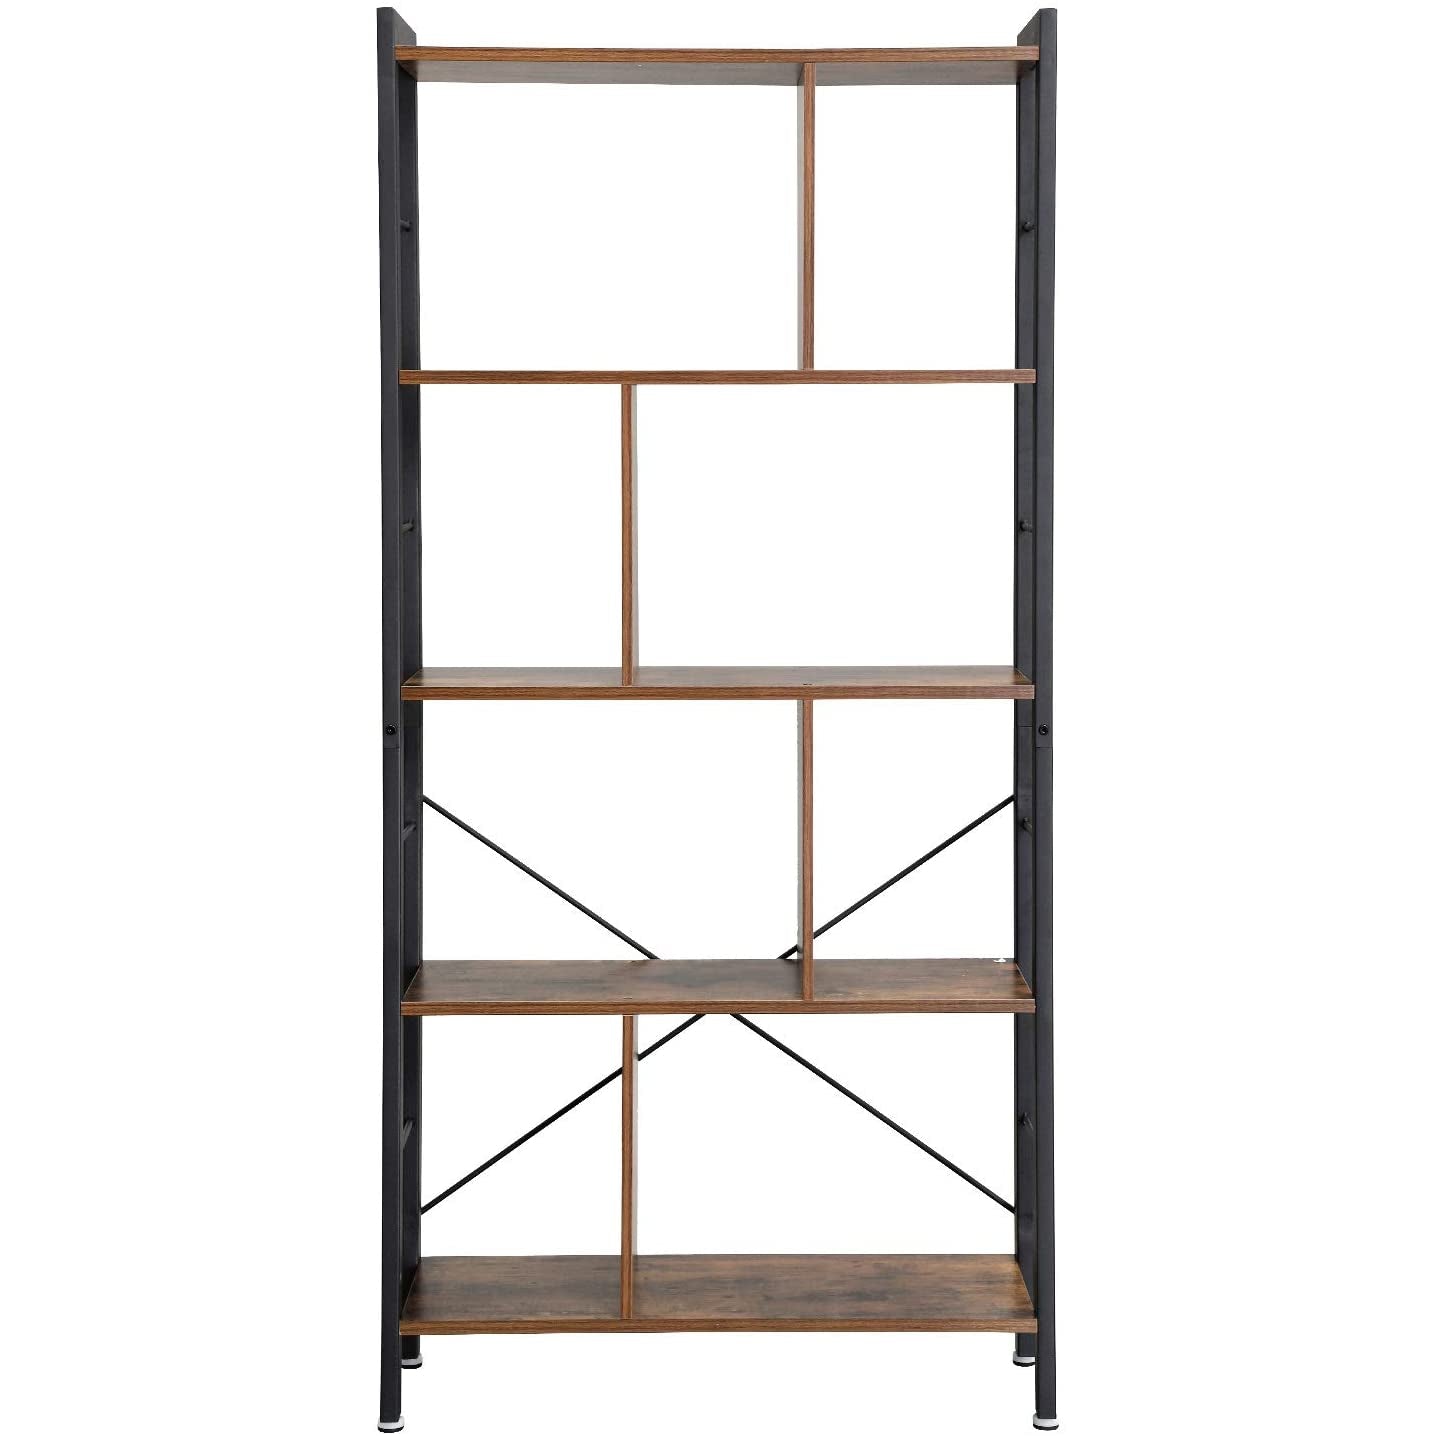 Nancy's Pasco Bookshelf - Bookcases - Industrial - Wood - Iron Frame - 74 x 30 x 154.5 cm (L x W x H)